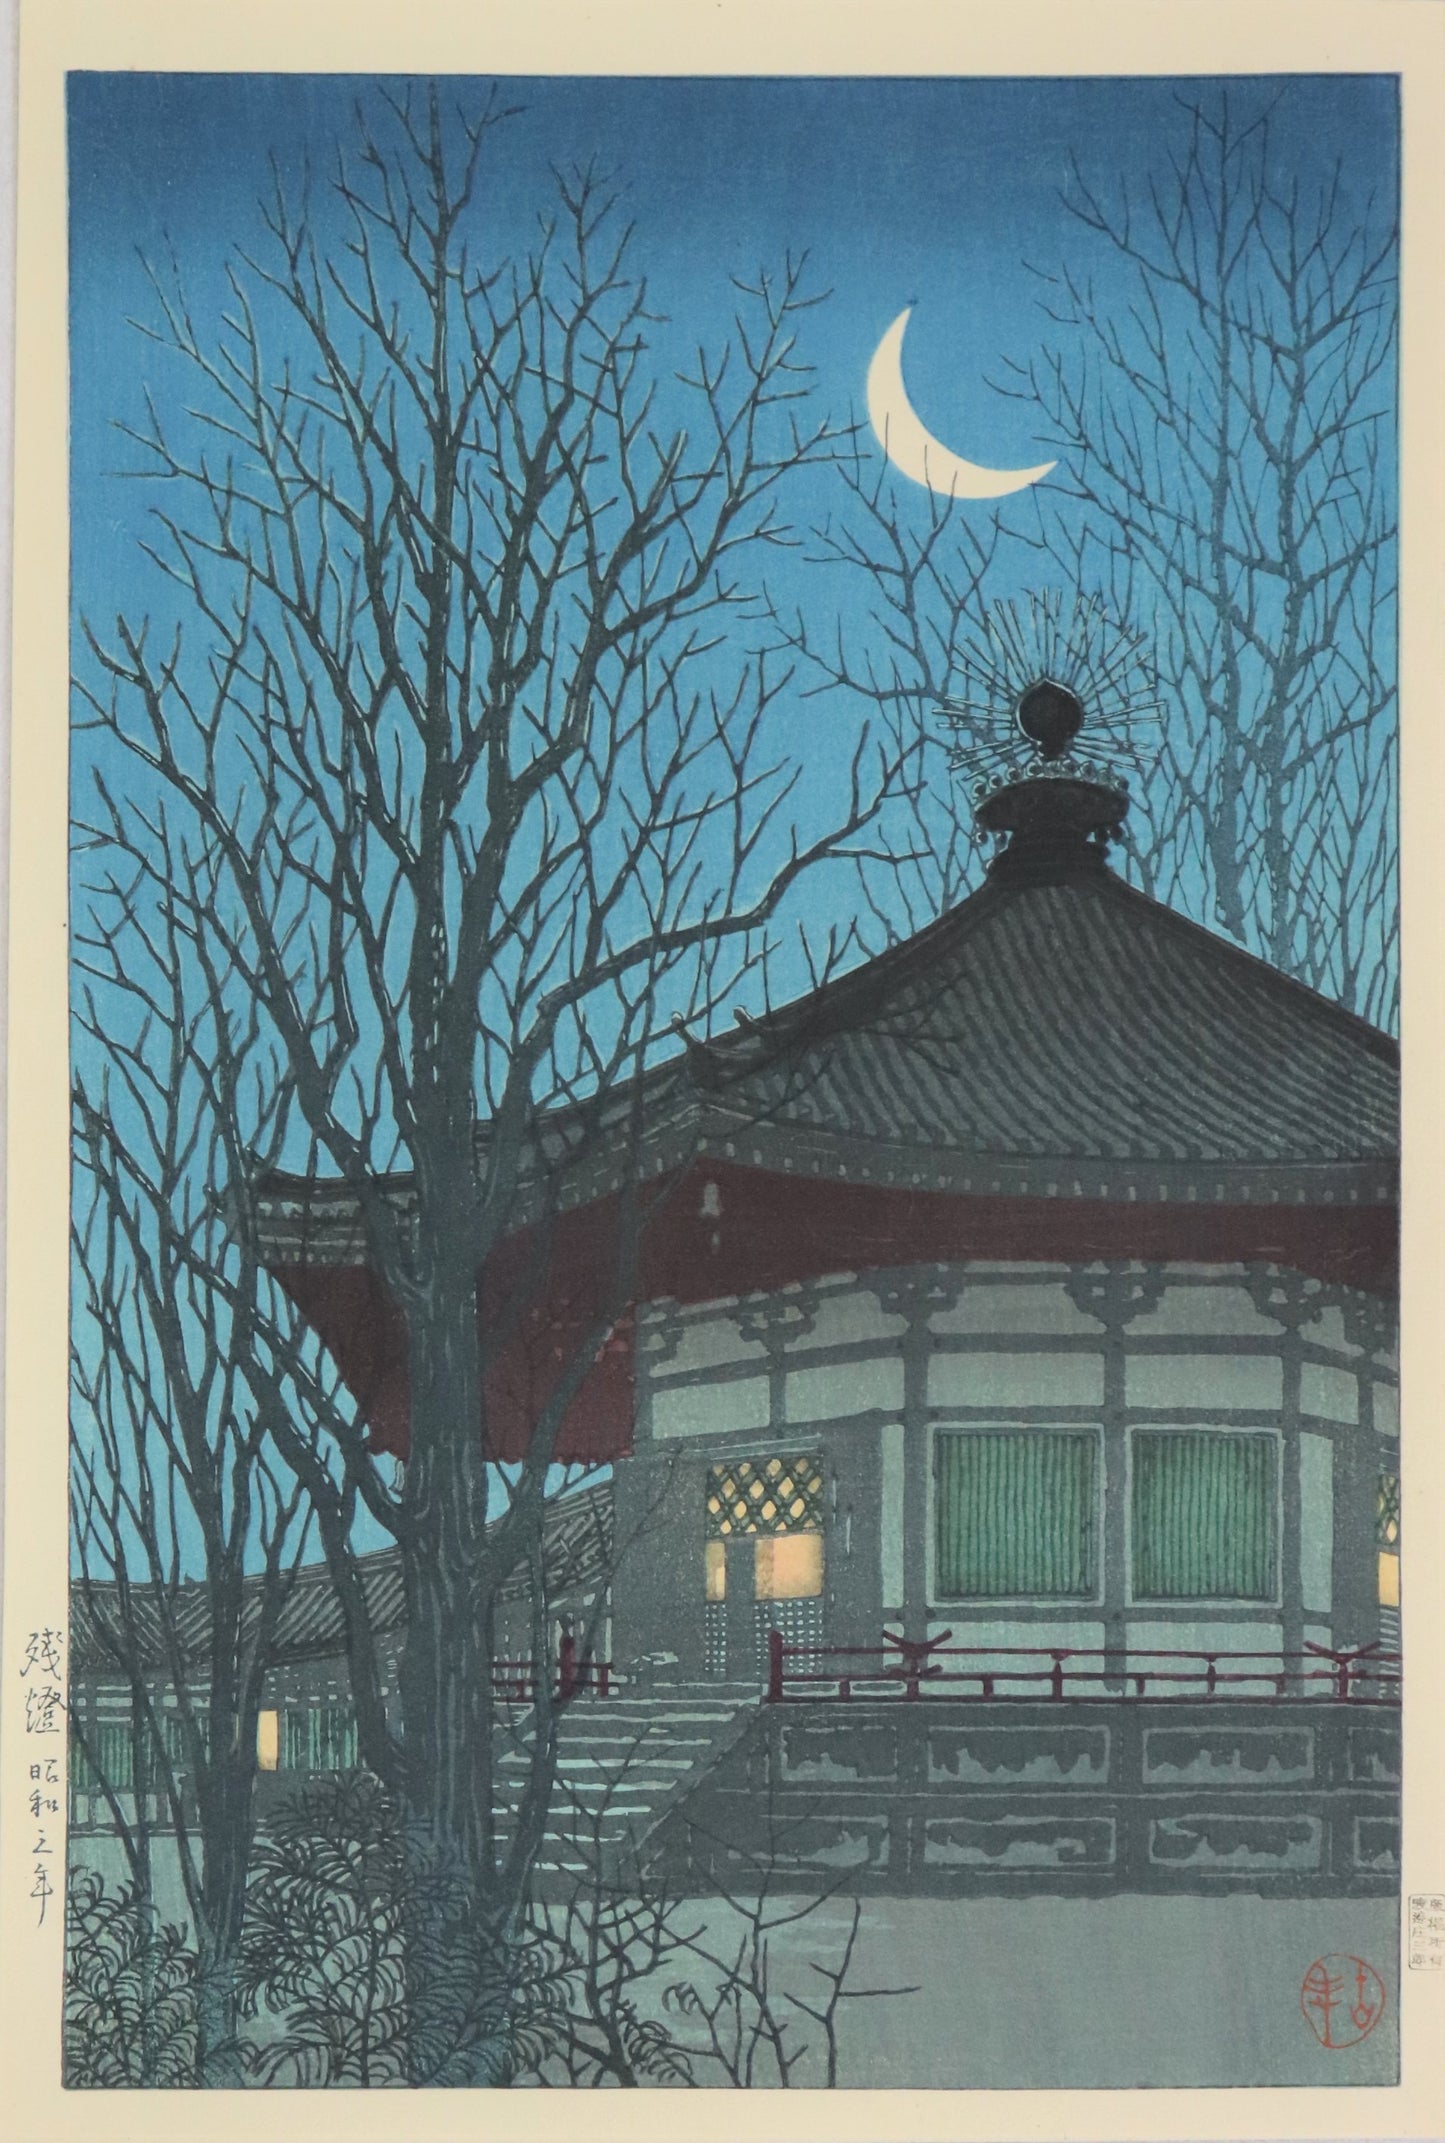 Fading Lamplight of a Pagoda by Uehara Konen / La lumière estompée d'une pagode par Uehara Konen ( 1928)